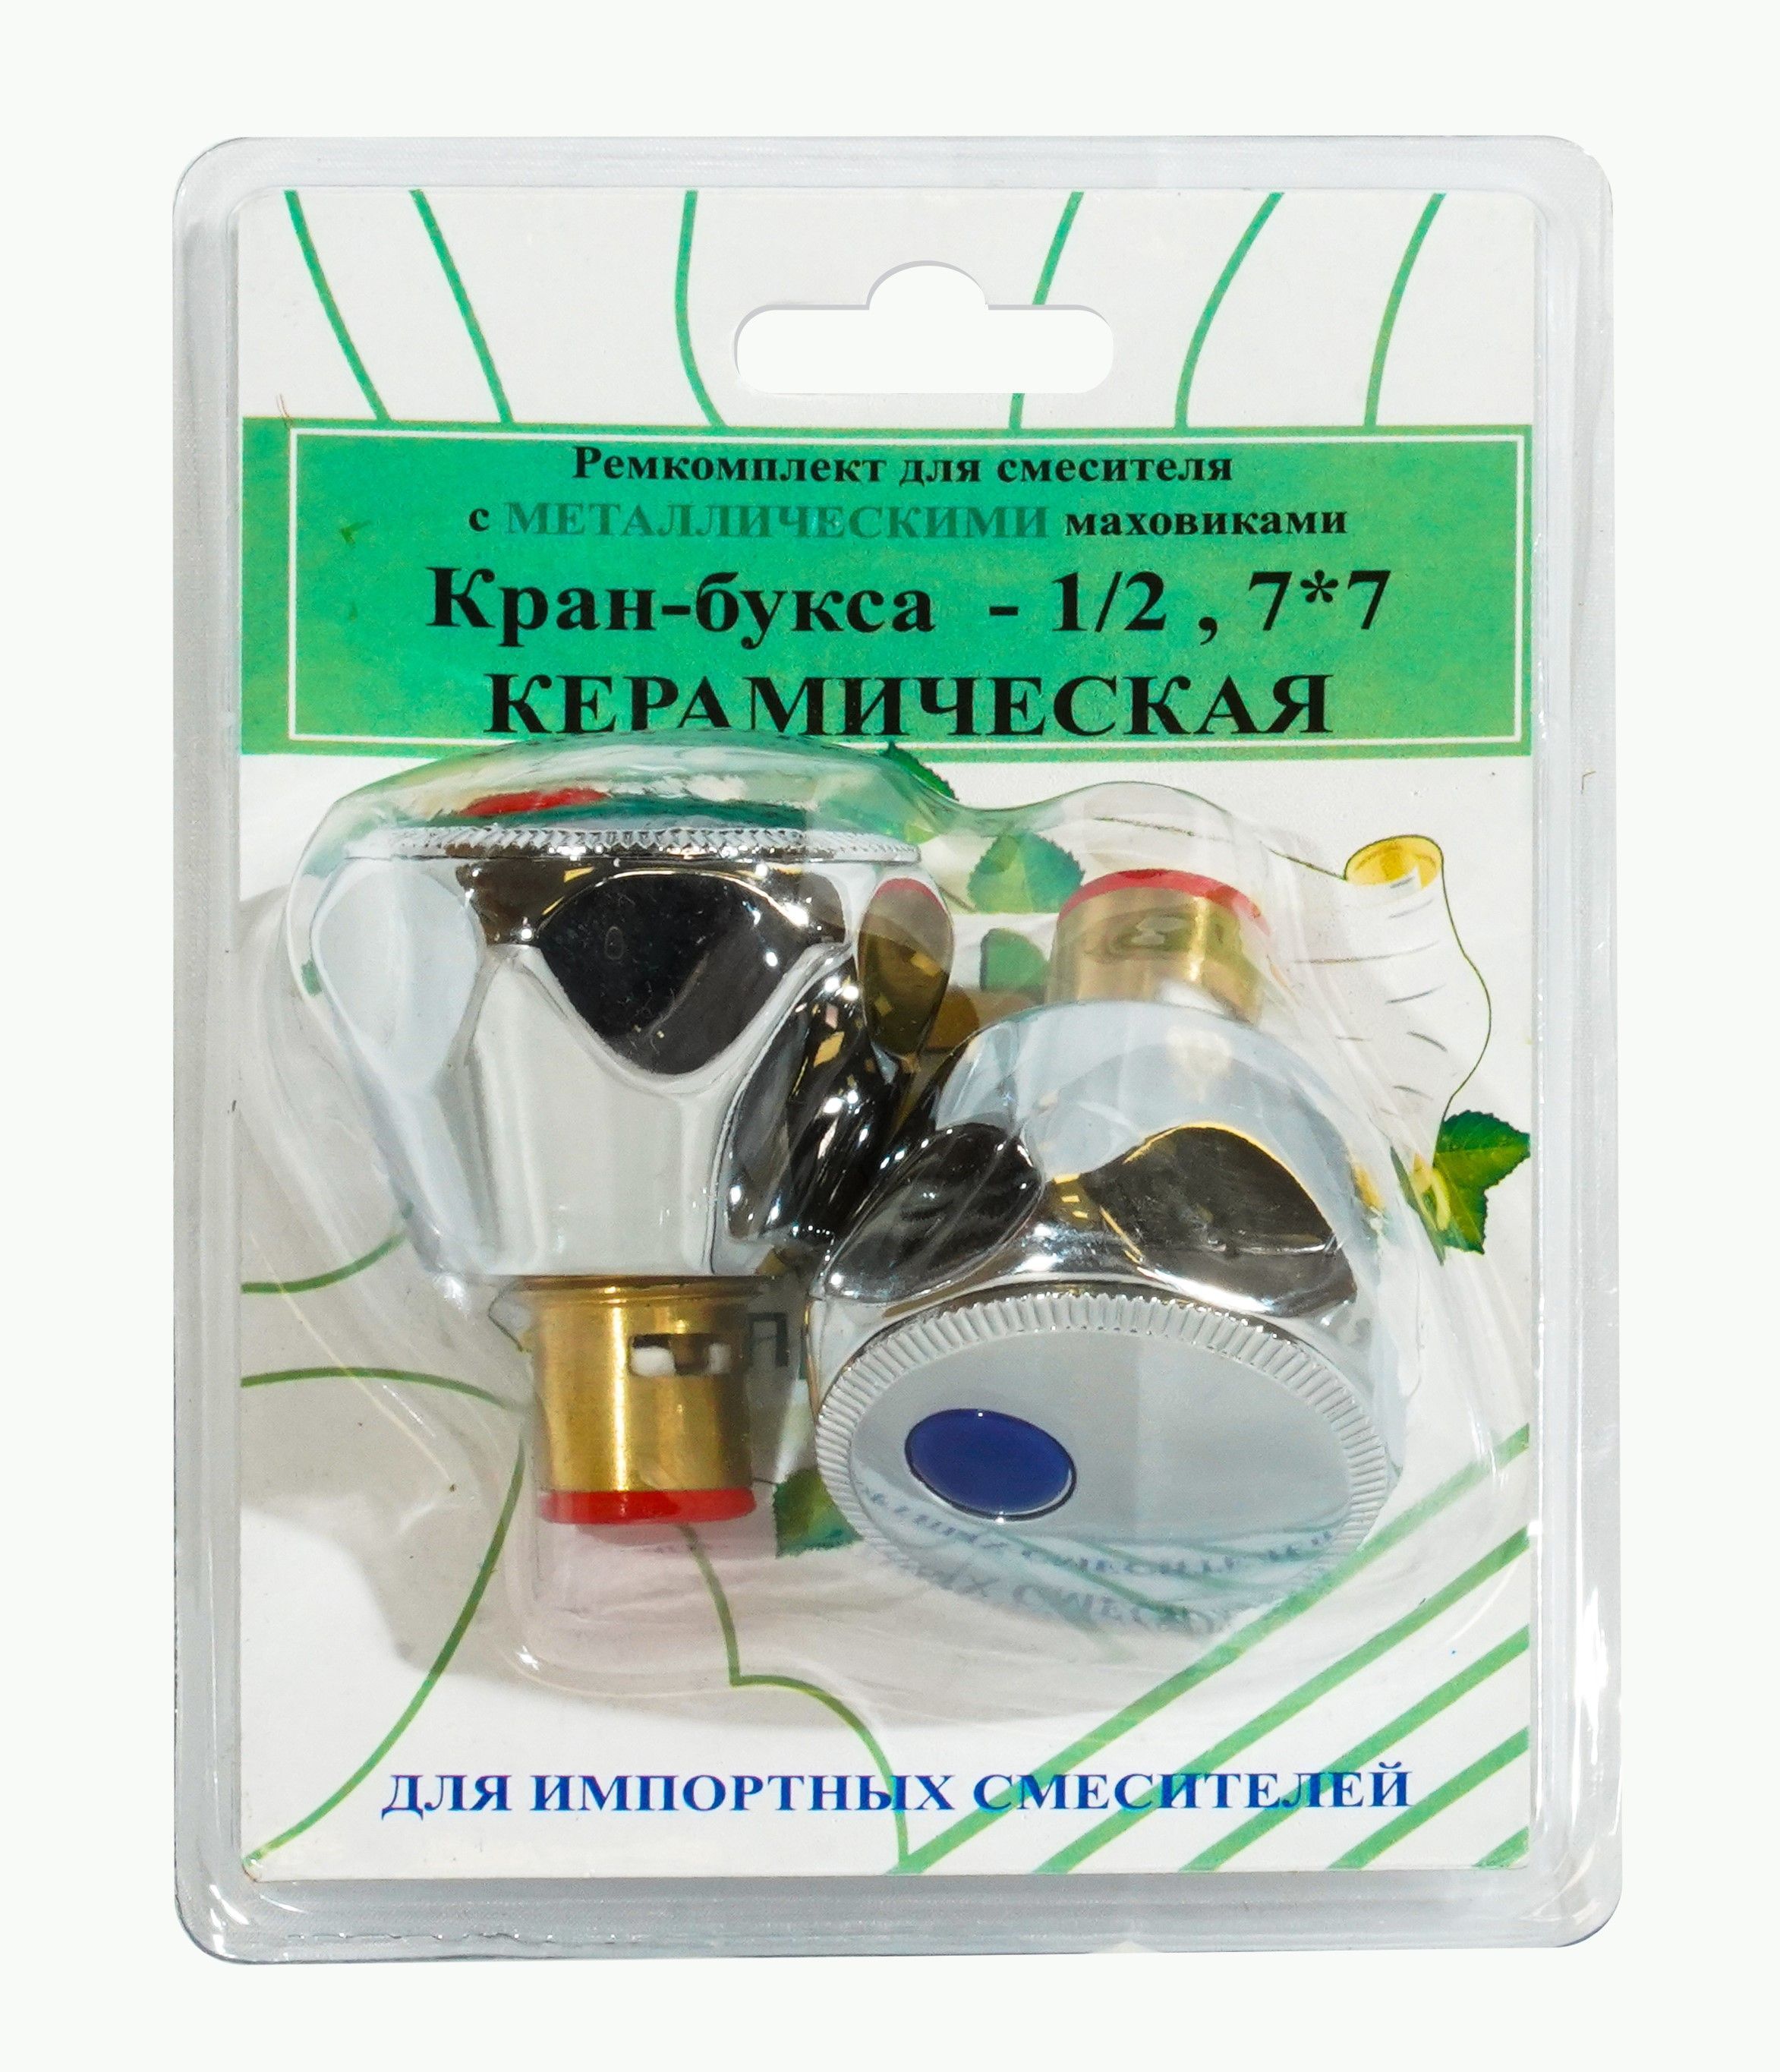 Комплект кран-буксы ПСМ 1/2" с маховиками (Мария) металл ПСМ RK-IMM - фото 1